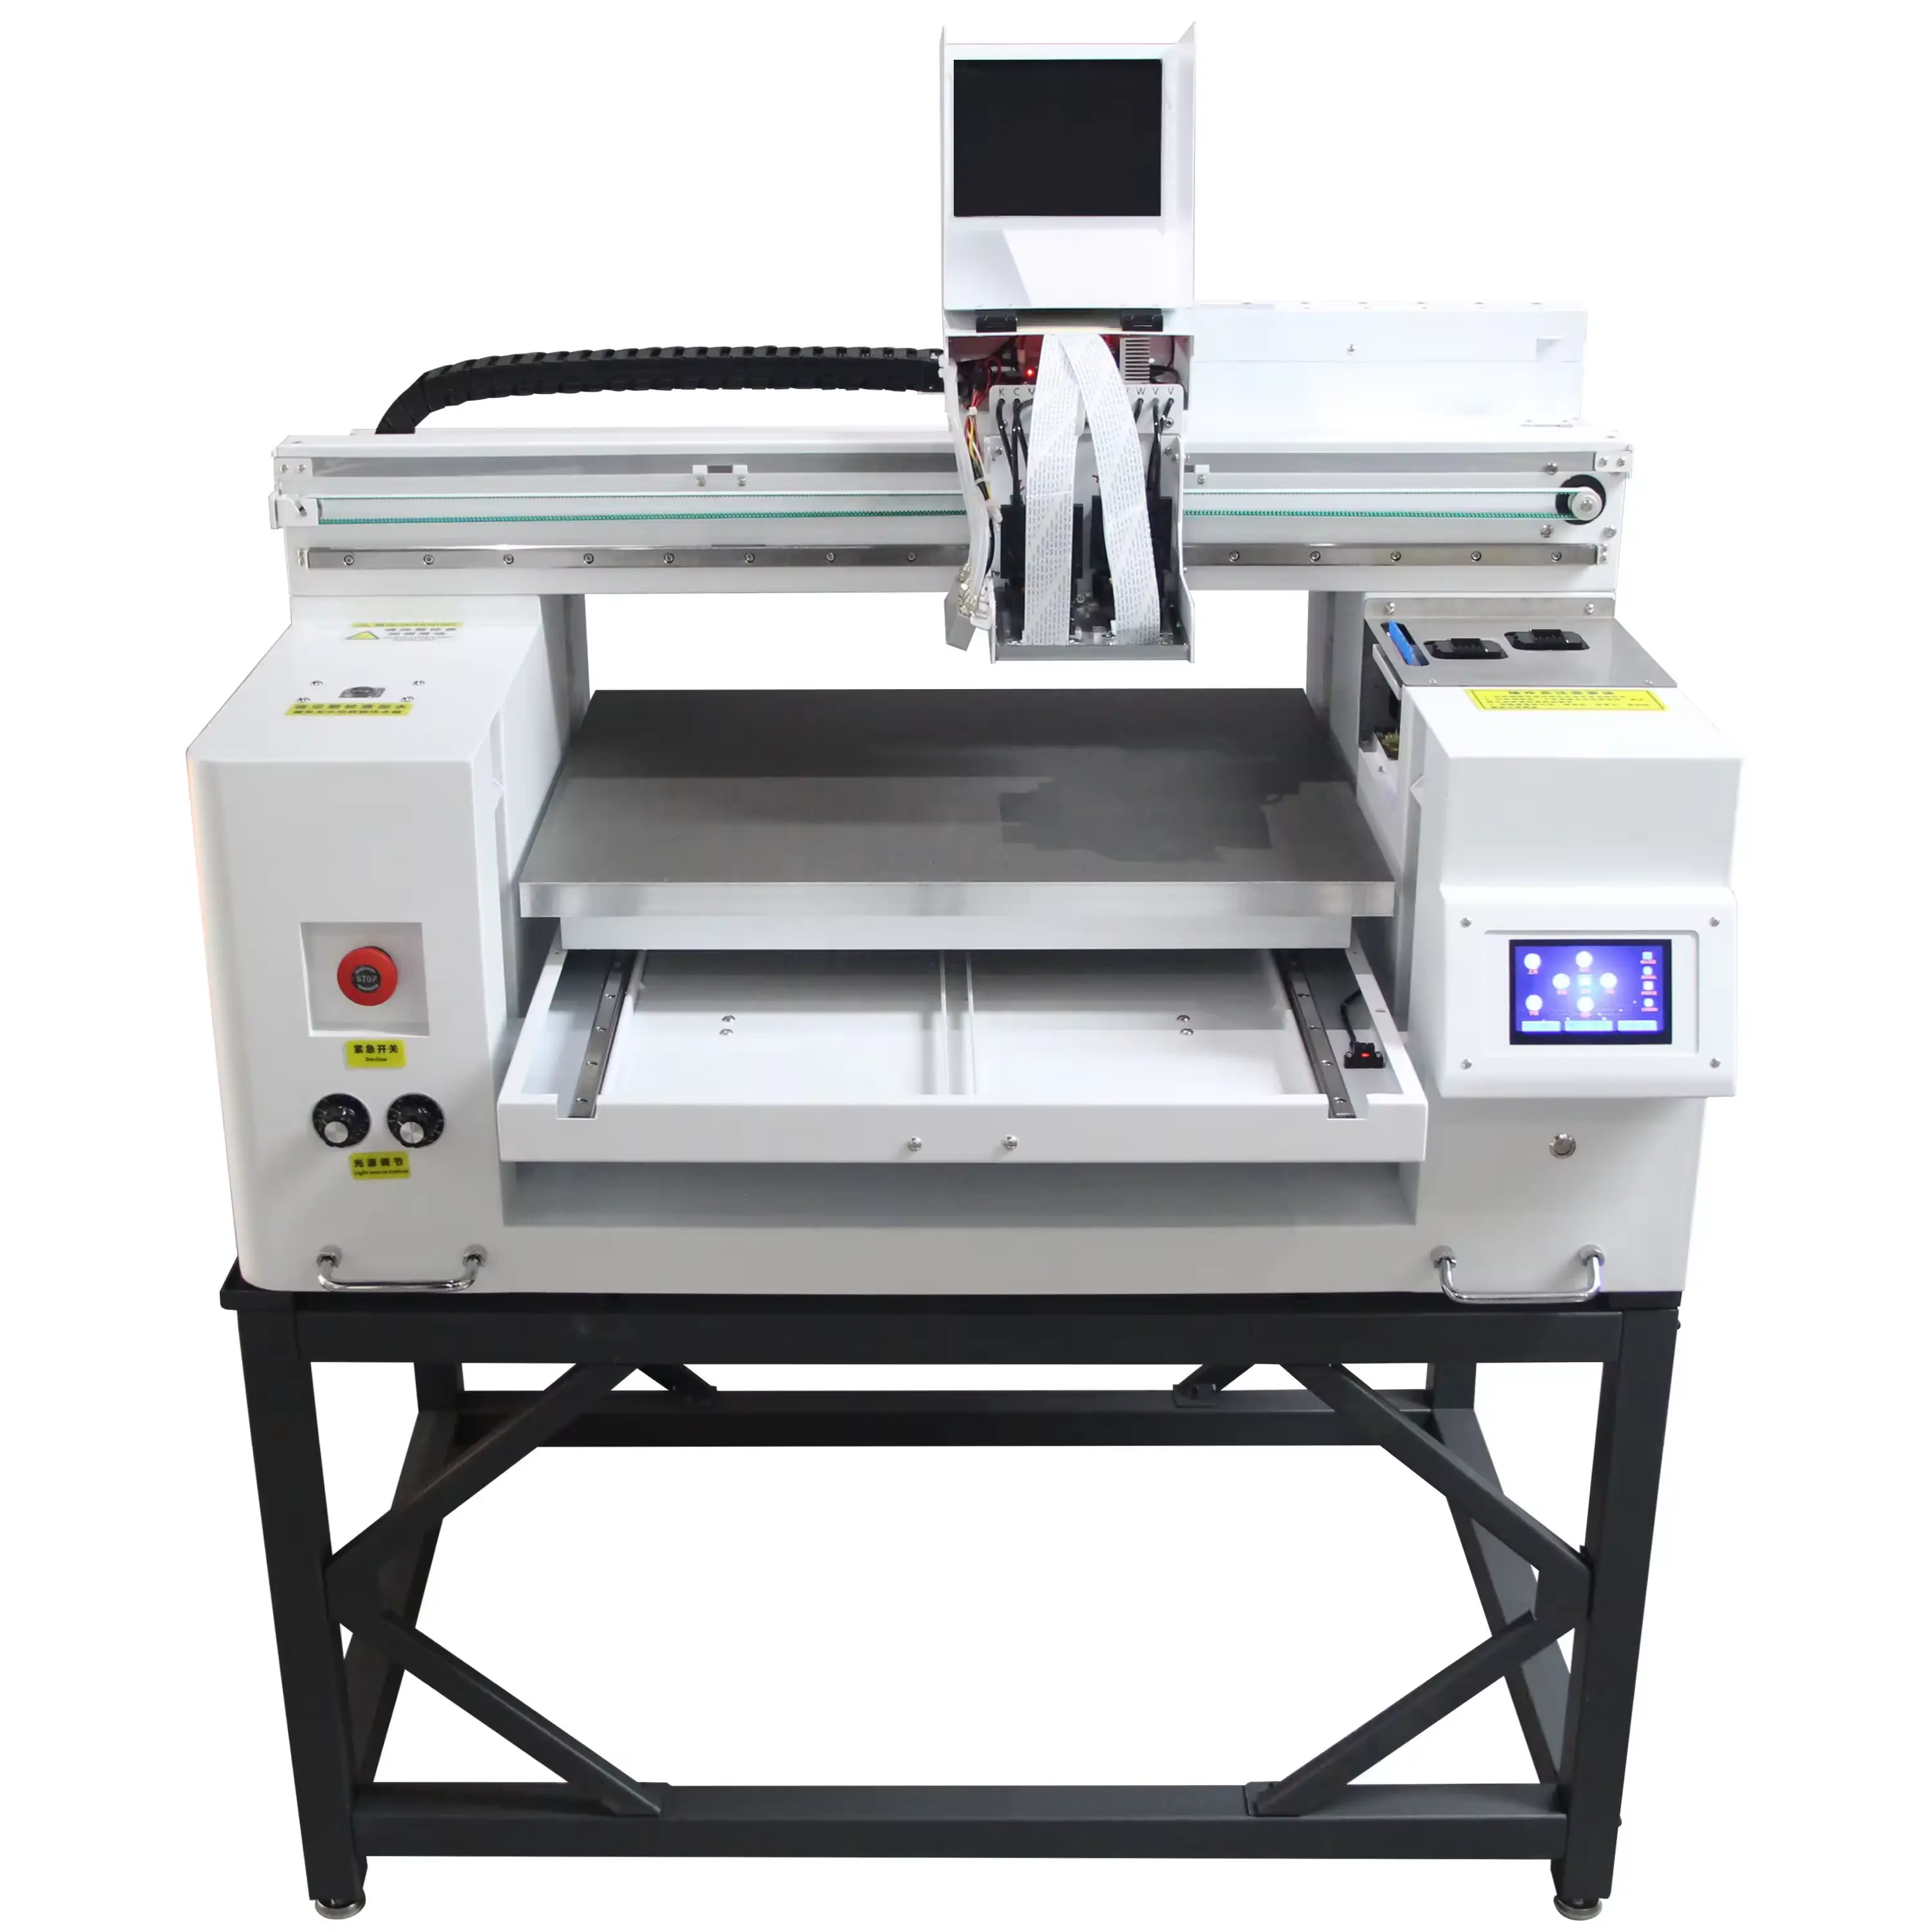 UV2513 uv flatbed printer for acrylic,wood,ceramic,metal,glass printing